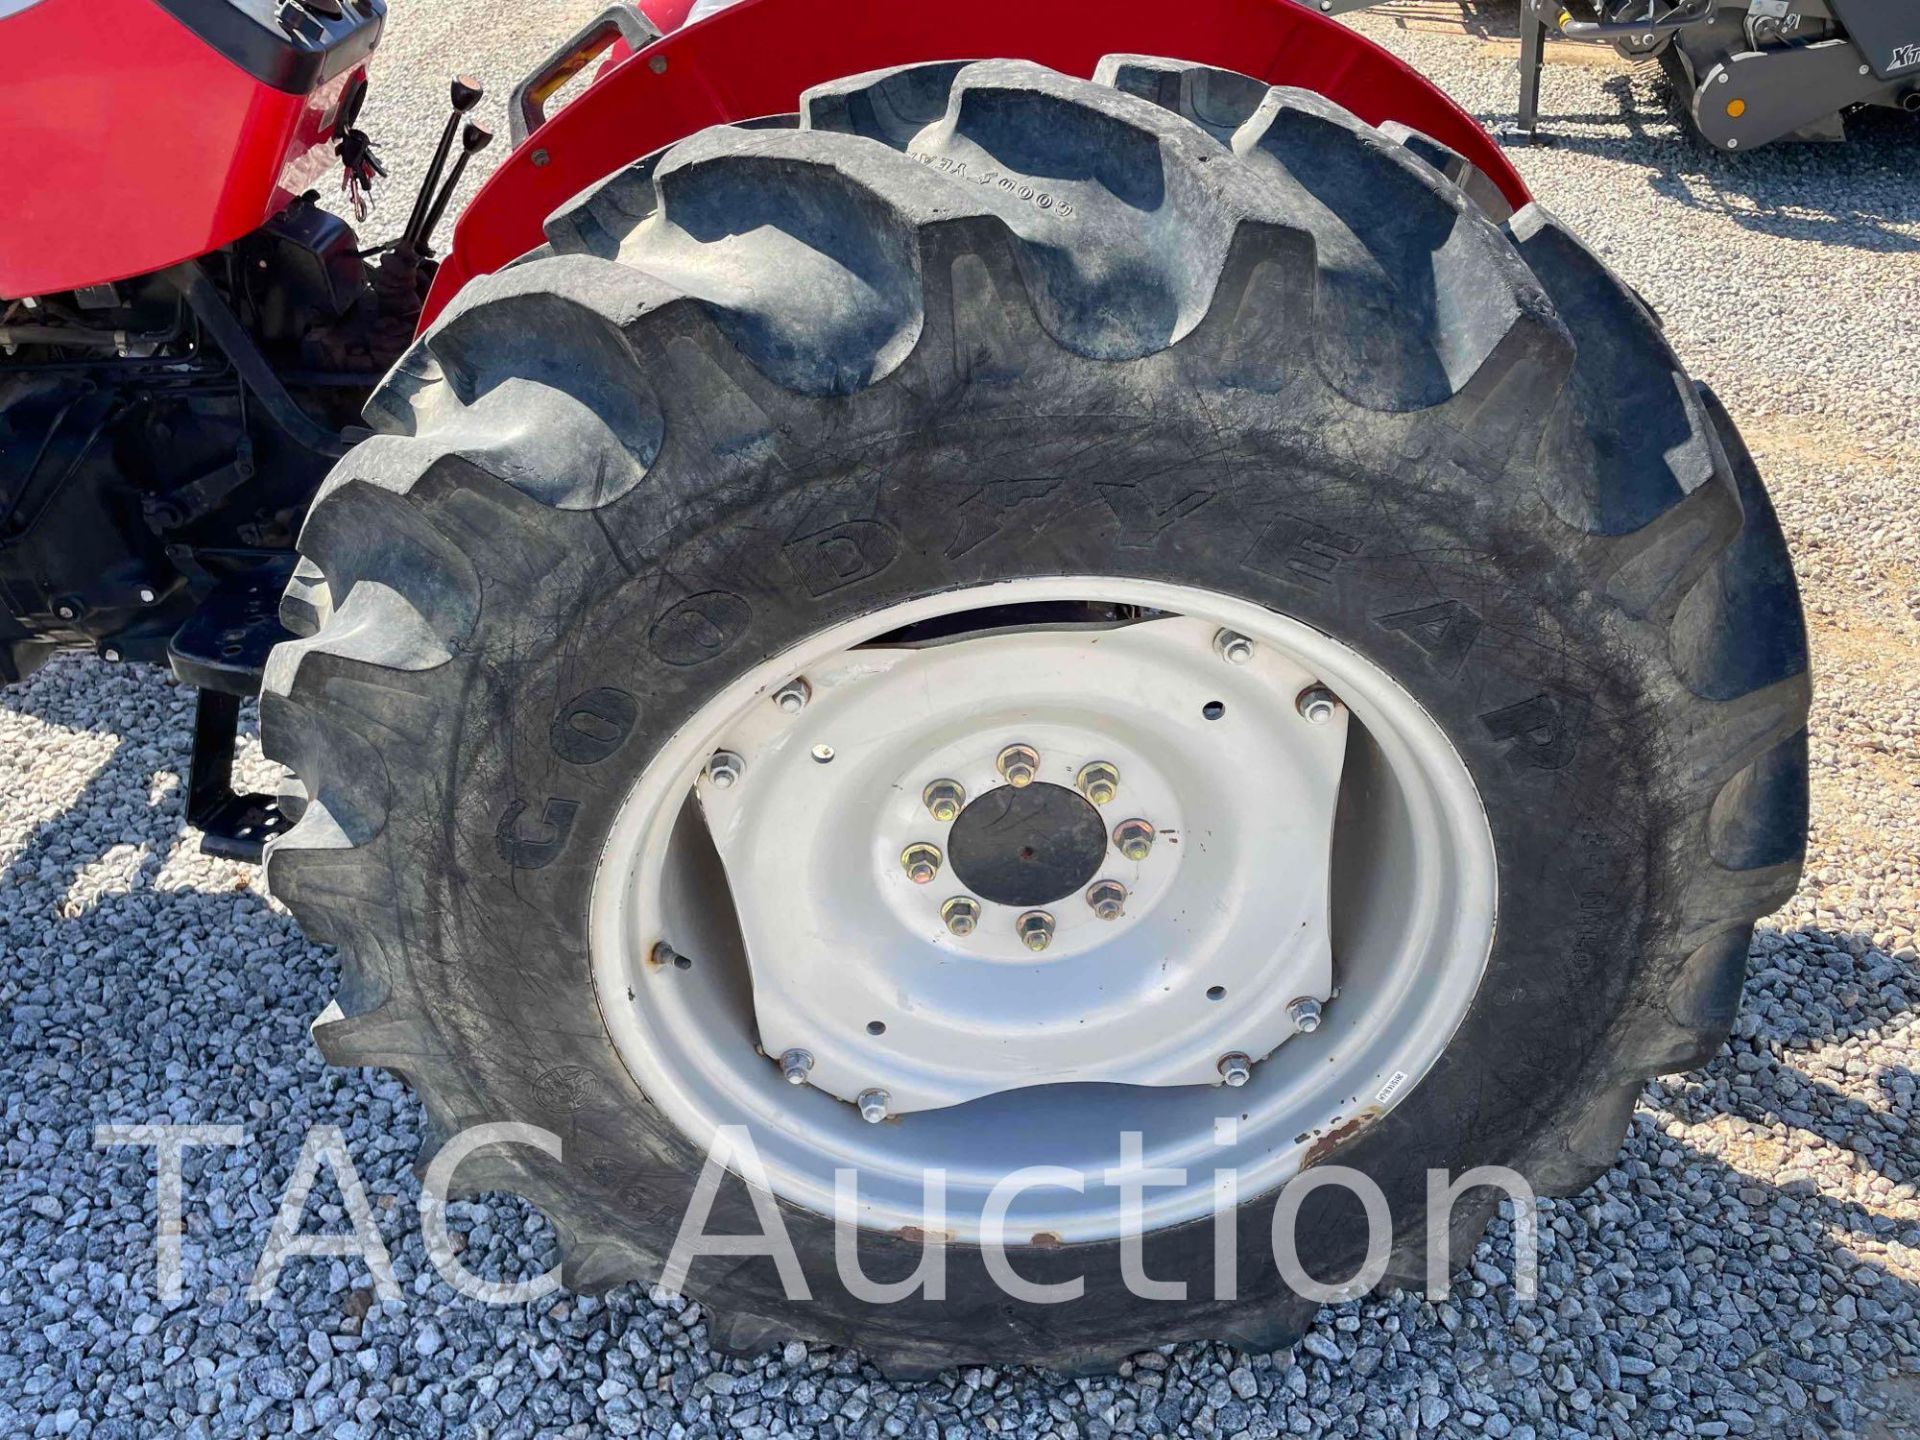 Massey Ferguson 2615 Tractor - Image 44 of 48